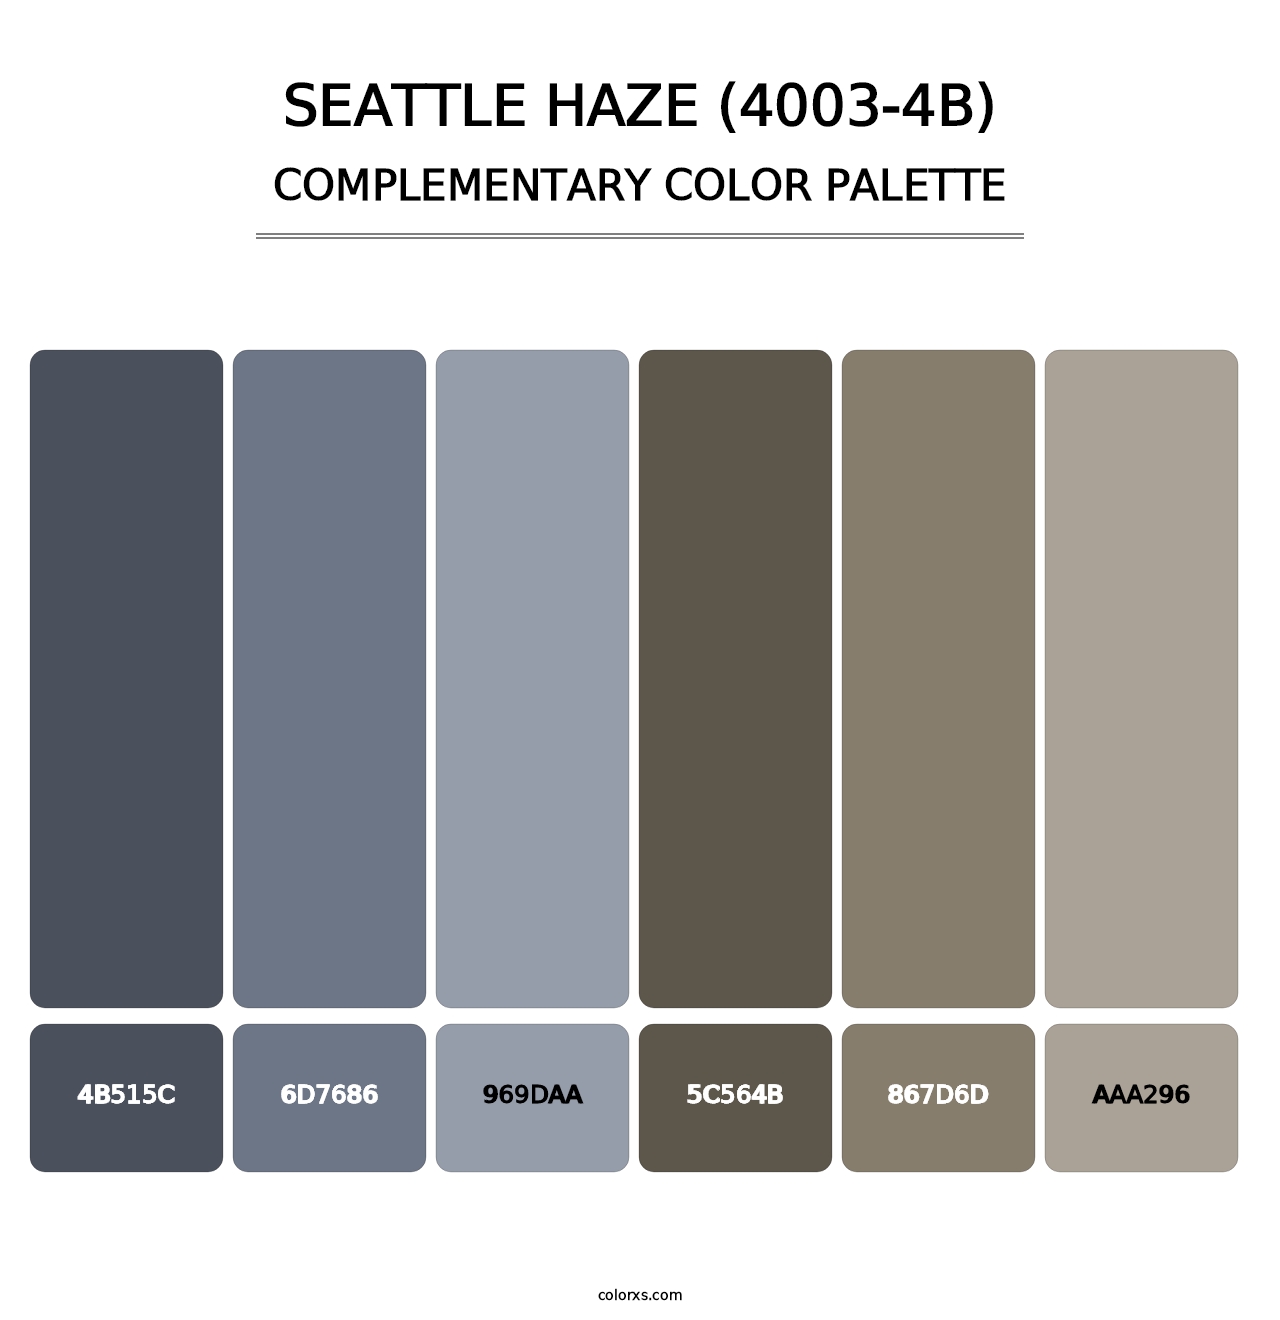 Seattle Haze (4003-4B) - Complementary Color Palette